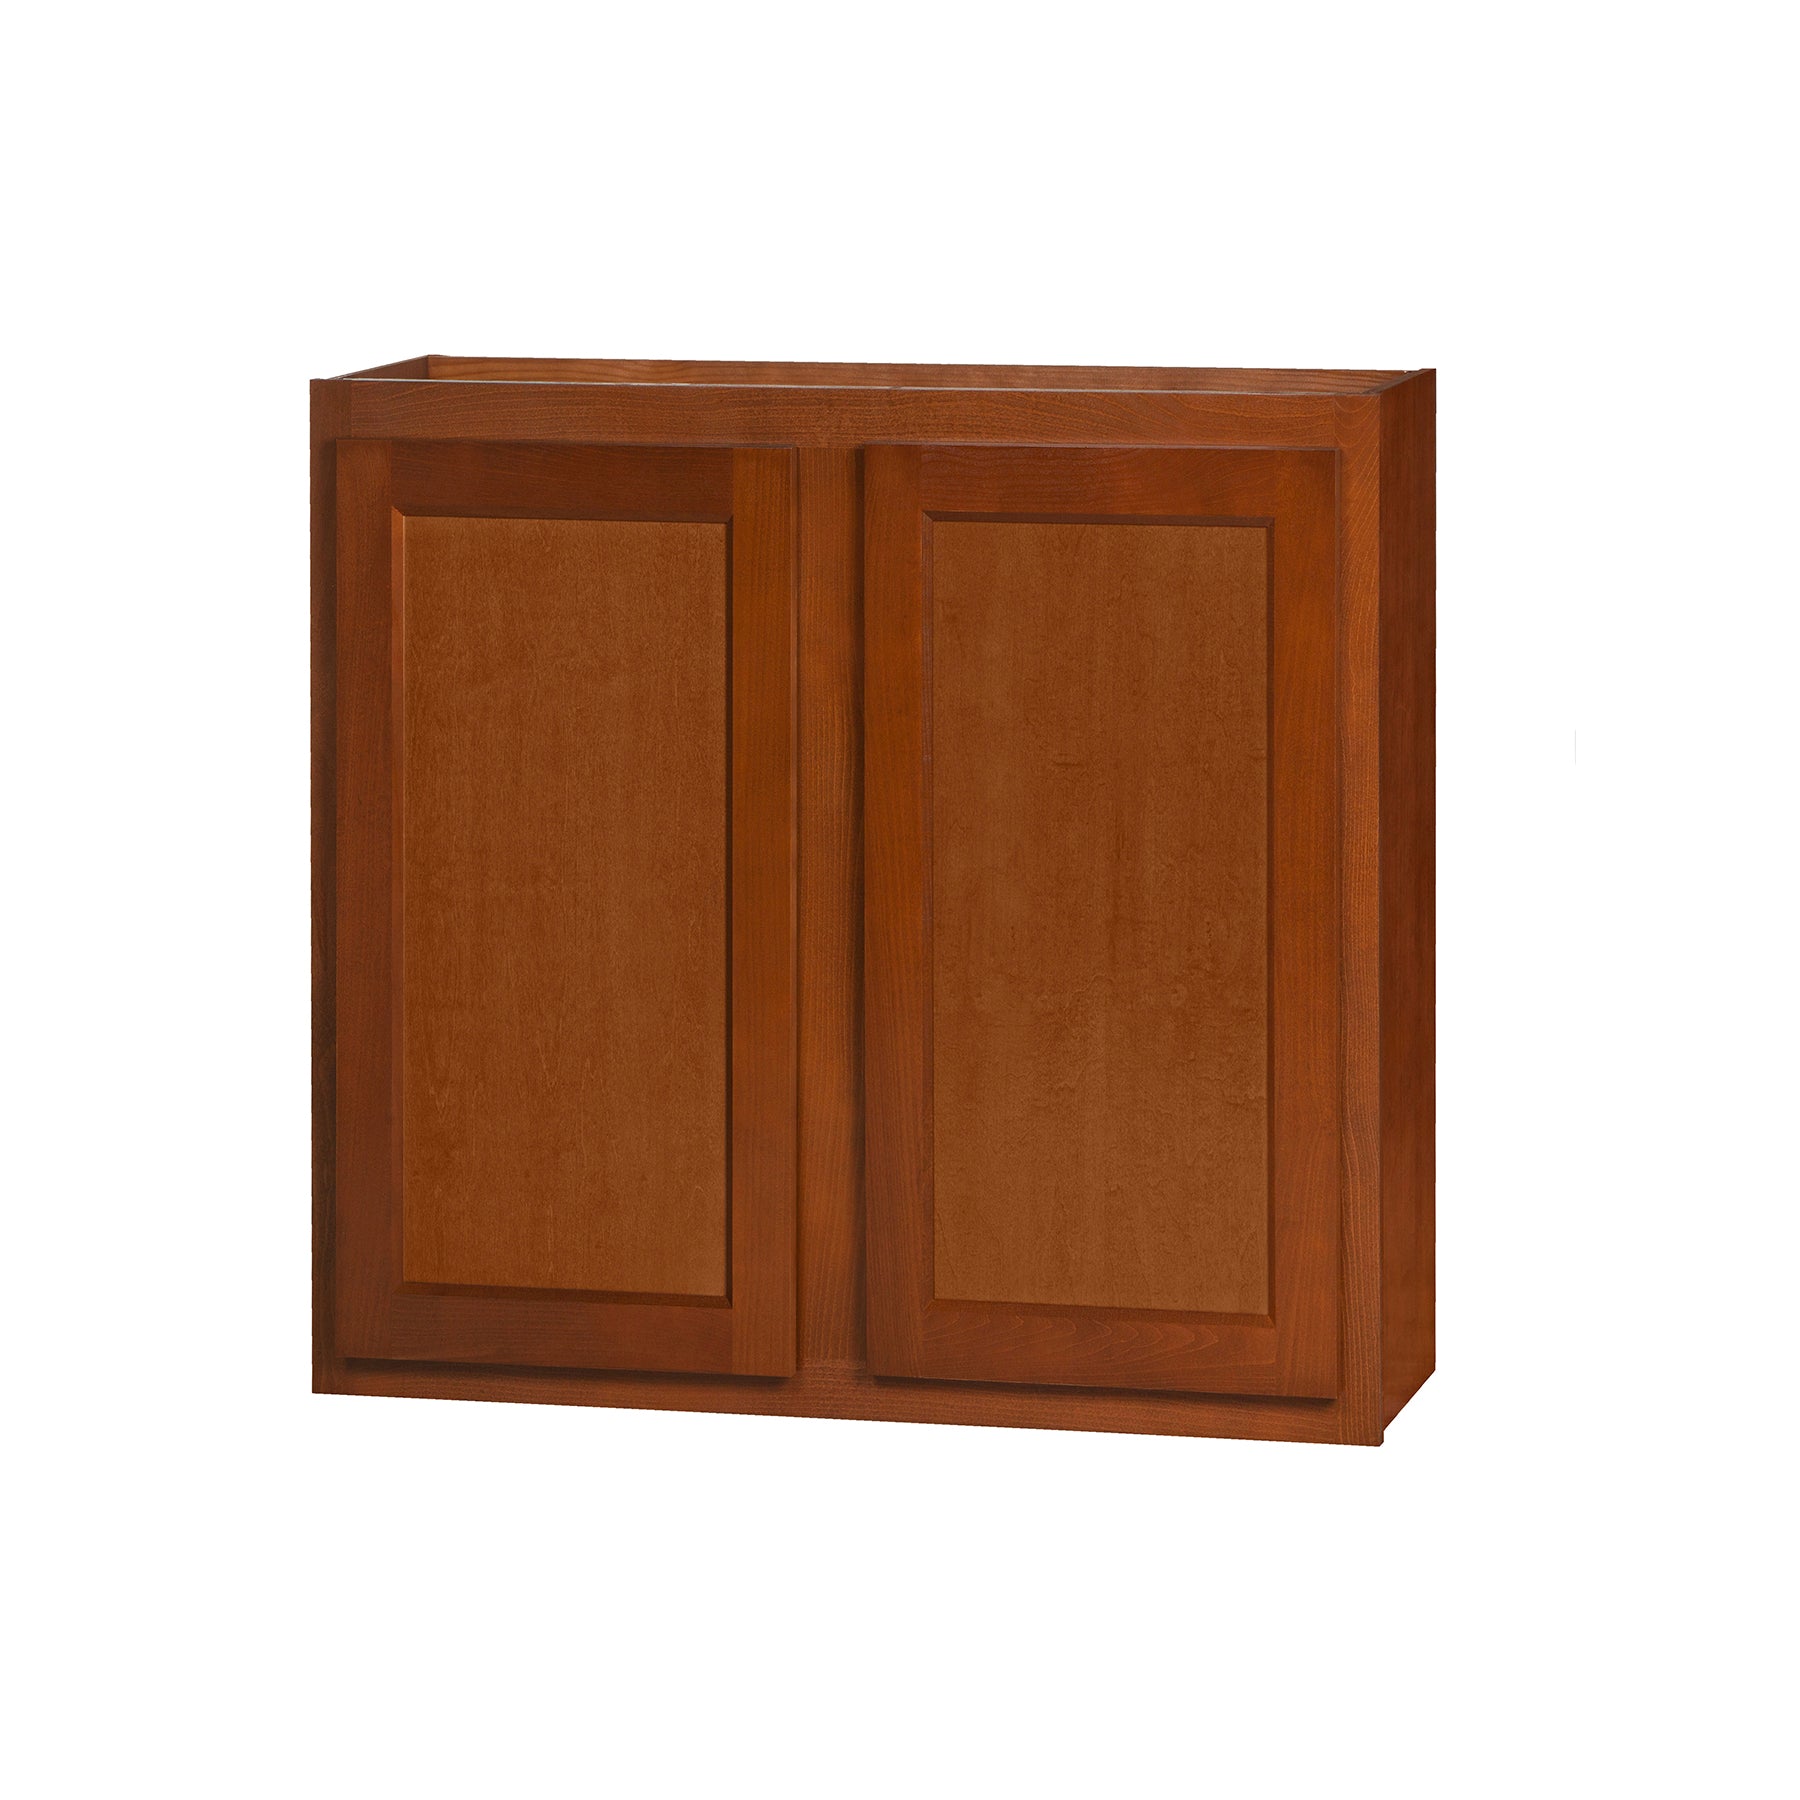 30 inch Wall Cabinets - Glenwood Shaker - 33 Inch W x 30 Inch H x 12 Inch D